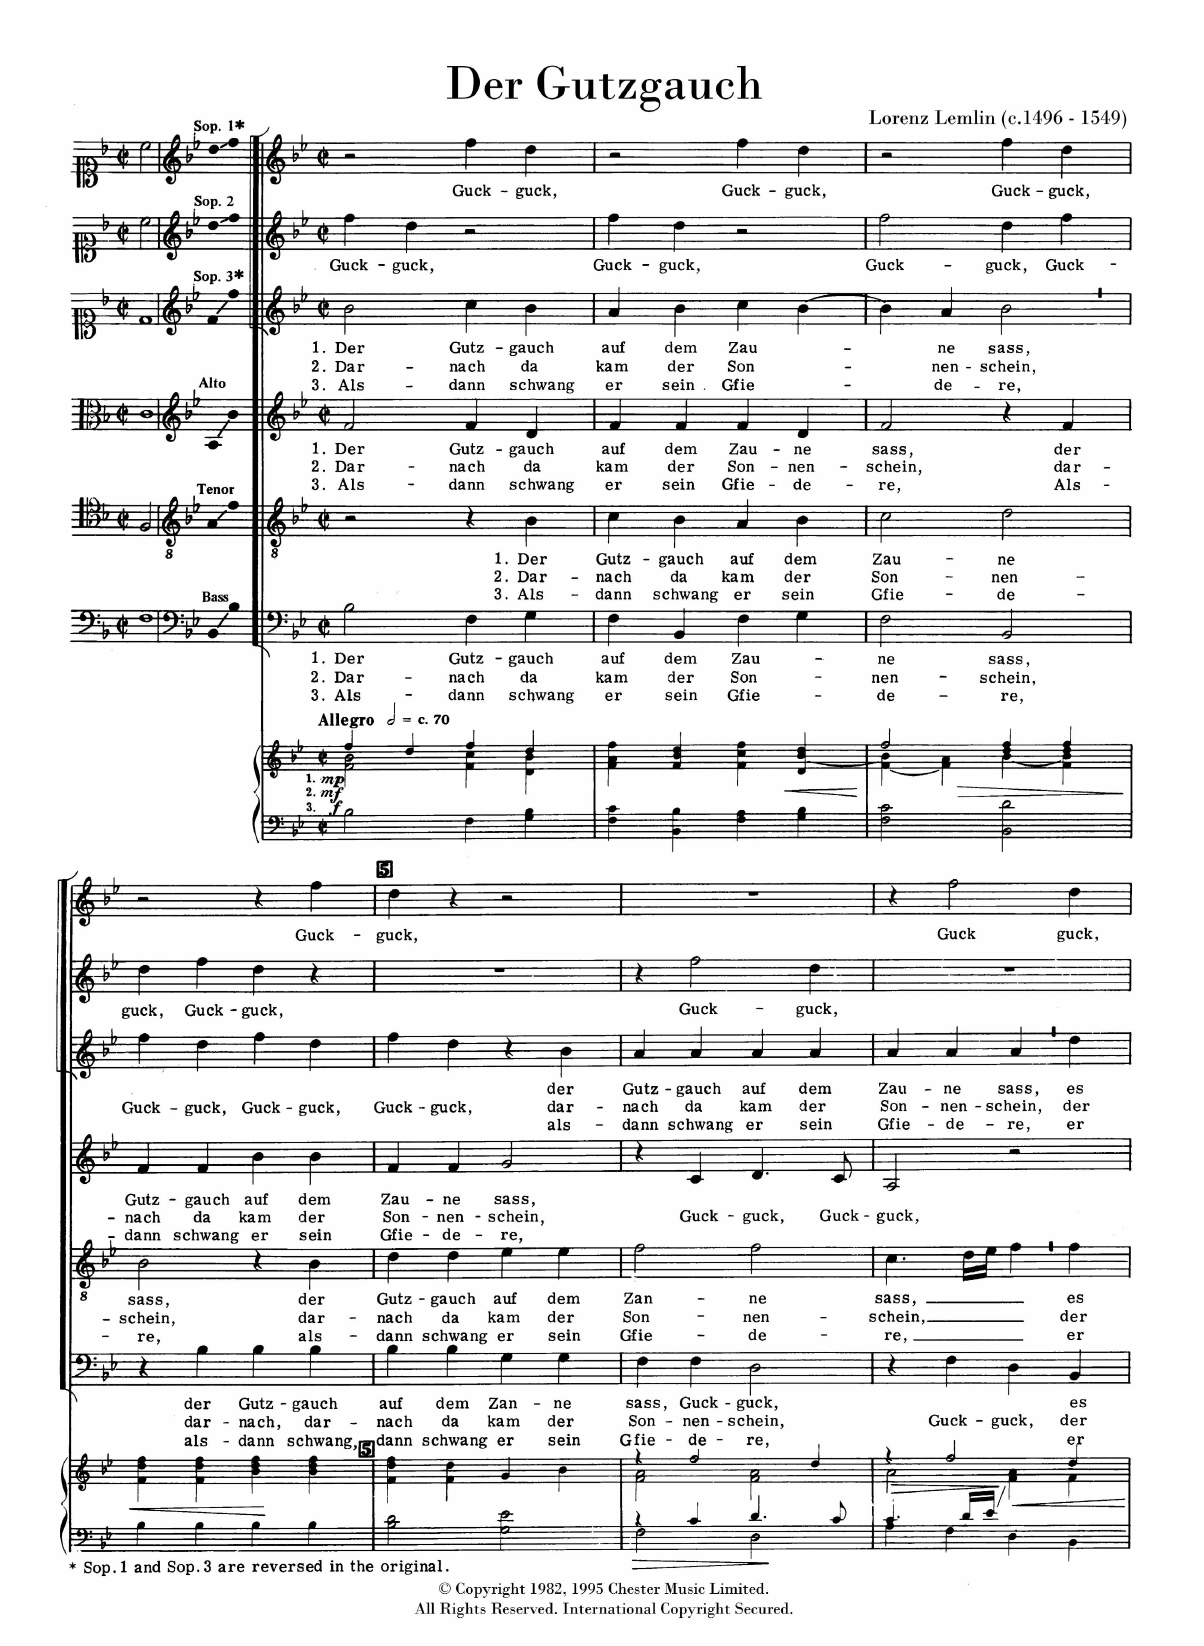 Download Lorenz Lemlin Der Gutzgauch Sheet Music and learn how to play SATB Choir PDF digital score in minutes